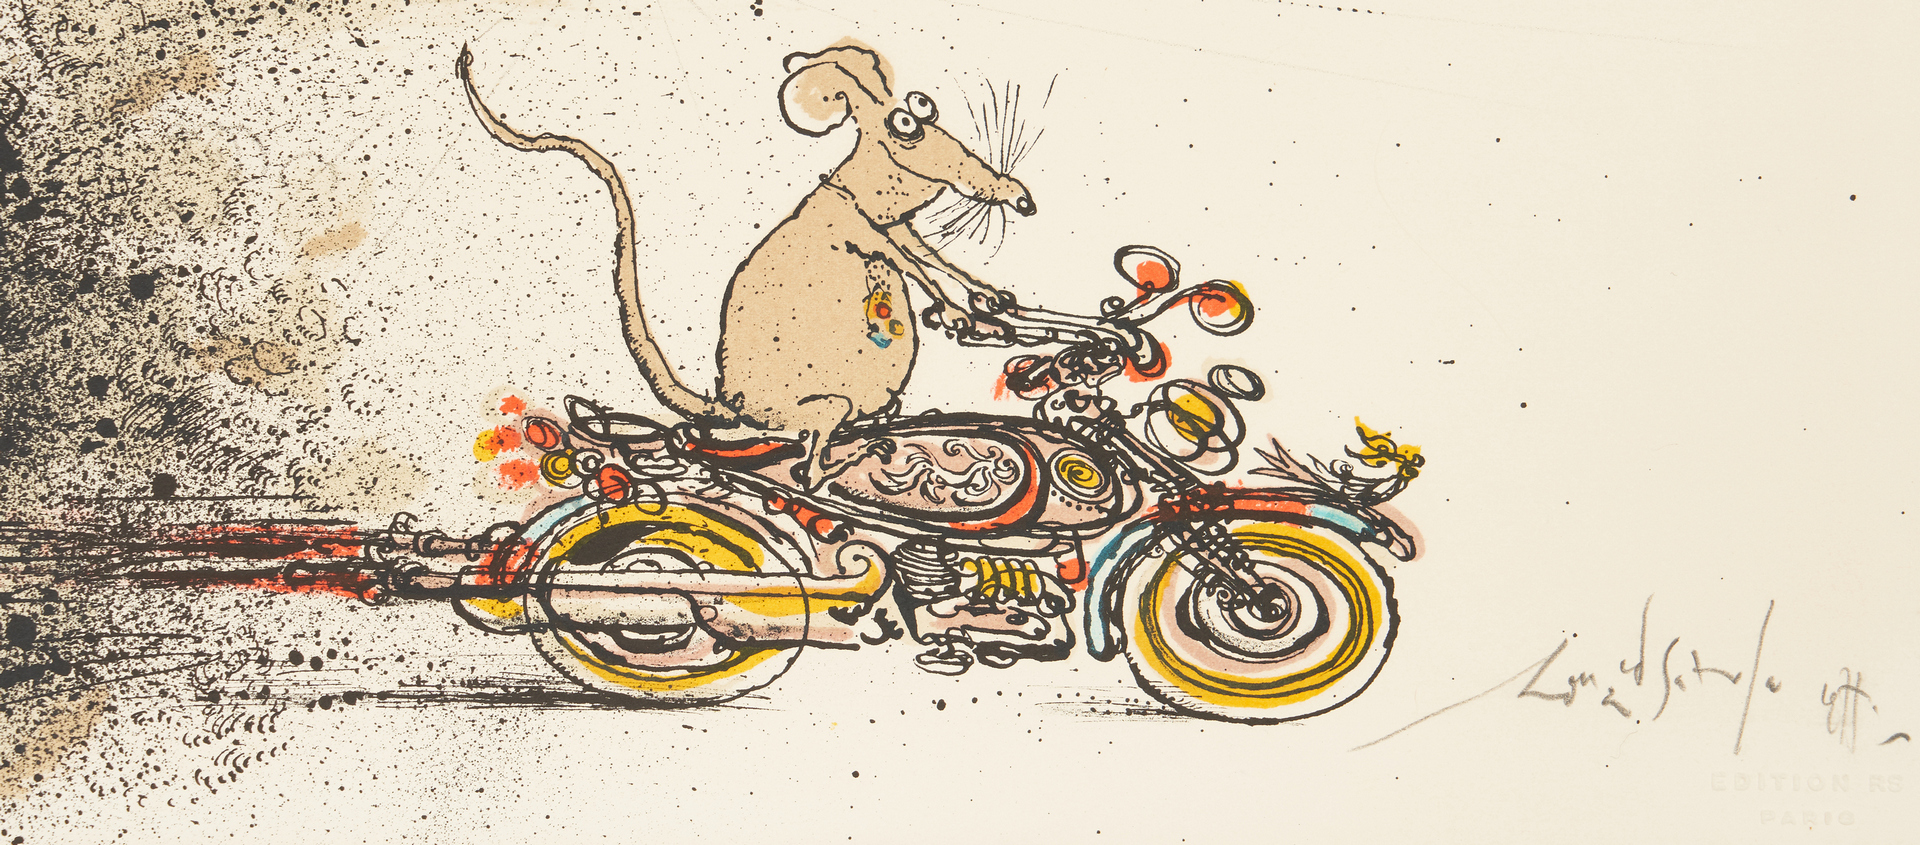 Lot 907: Ronald Searle Signed Litho, "Rat Race"